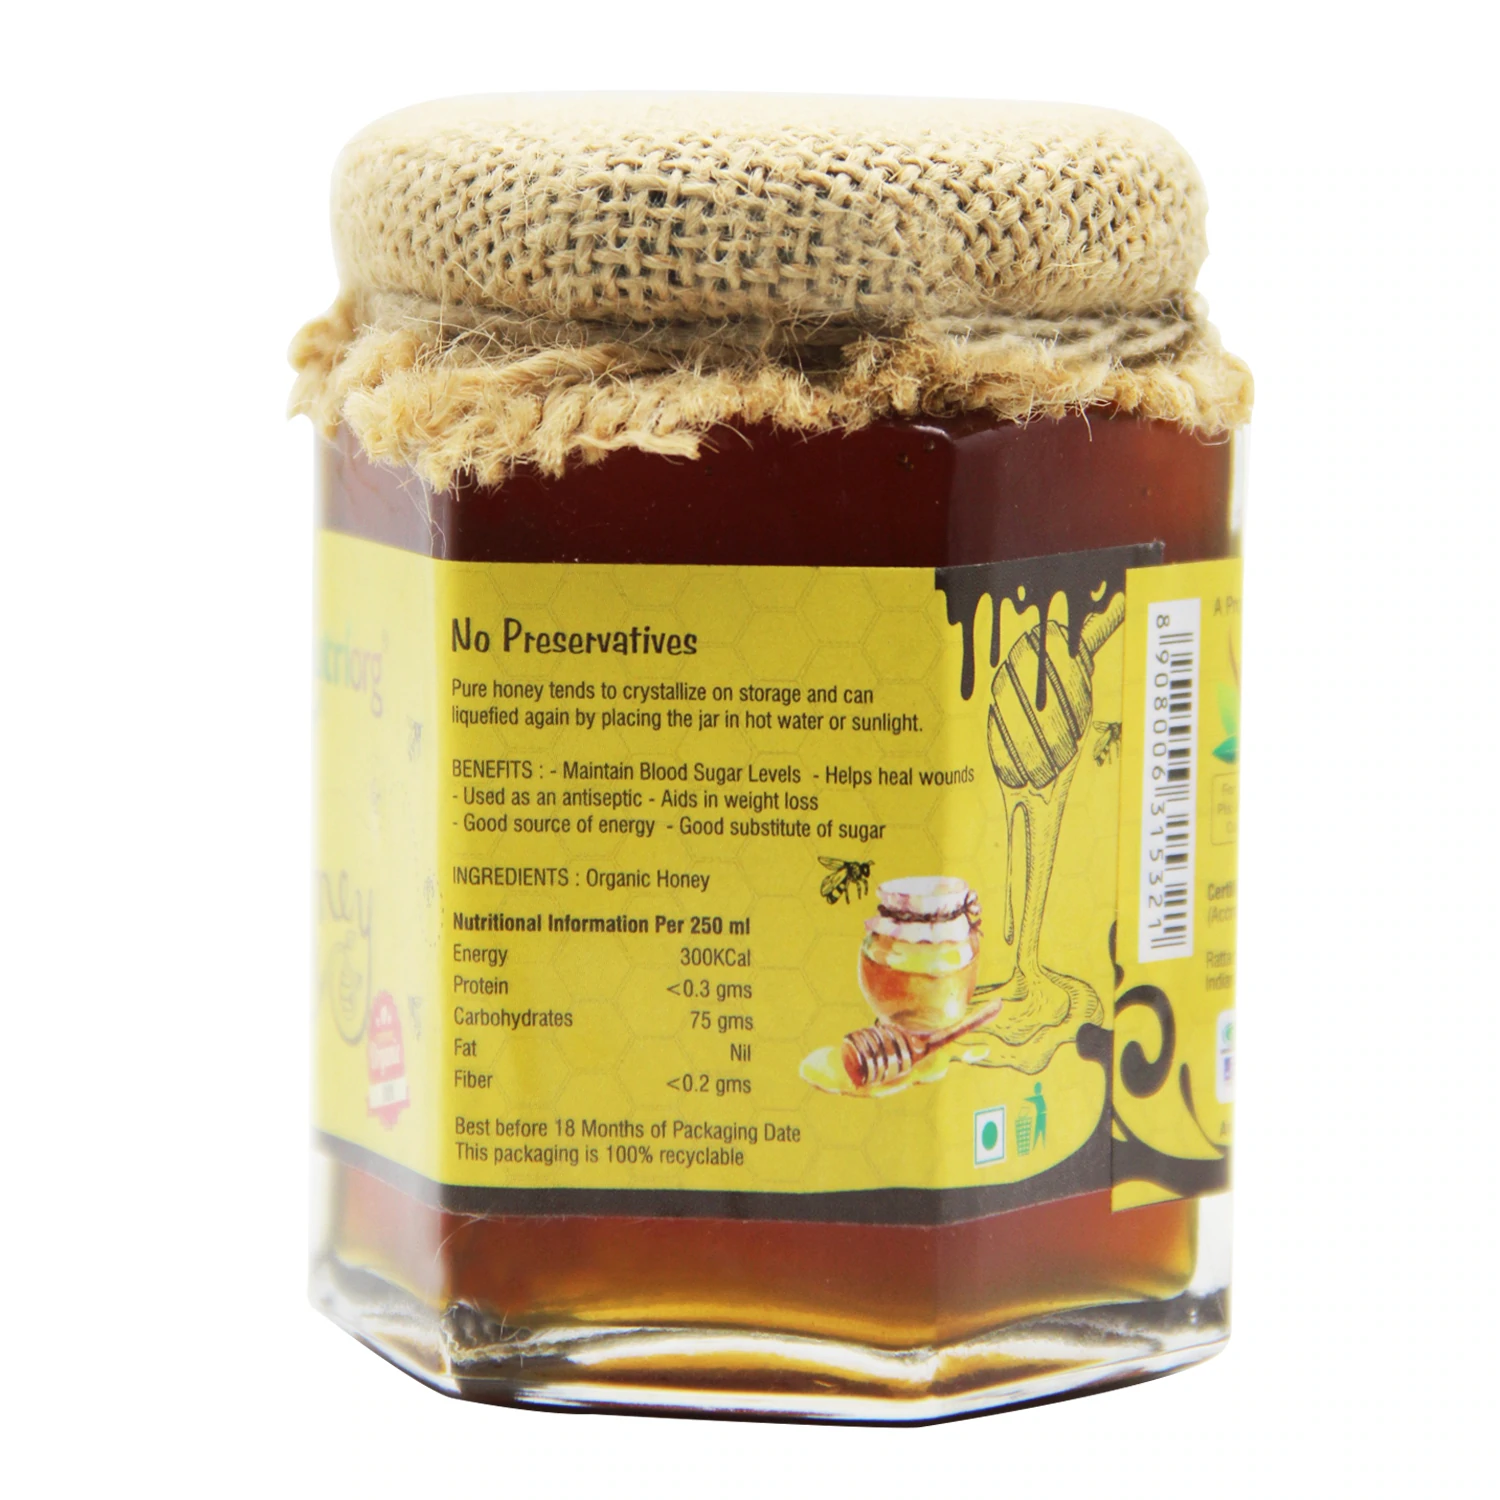 Nutriorg Certified Organic Honey 250g ( ...